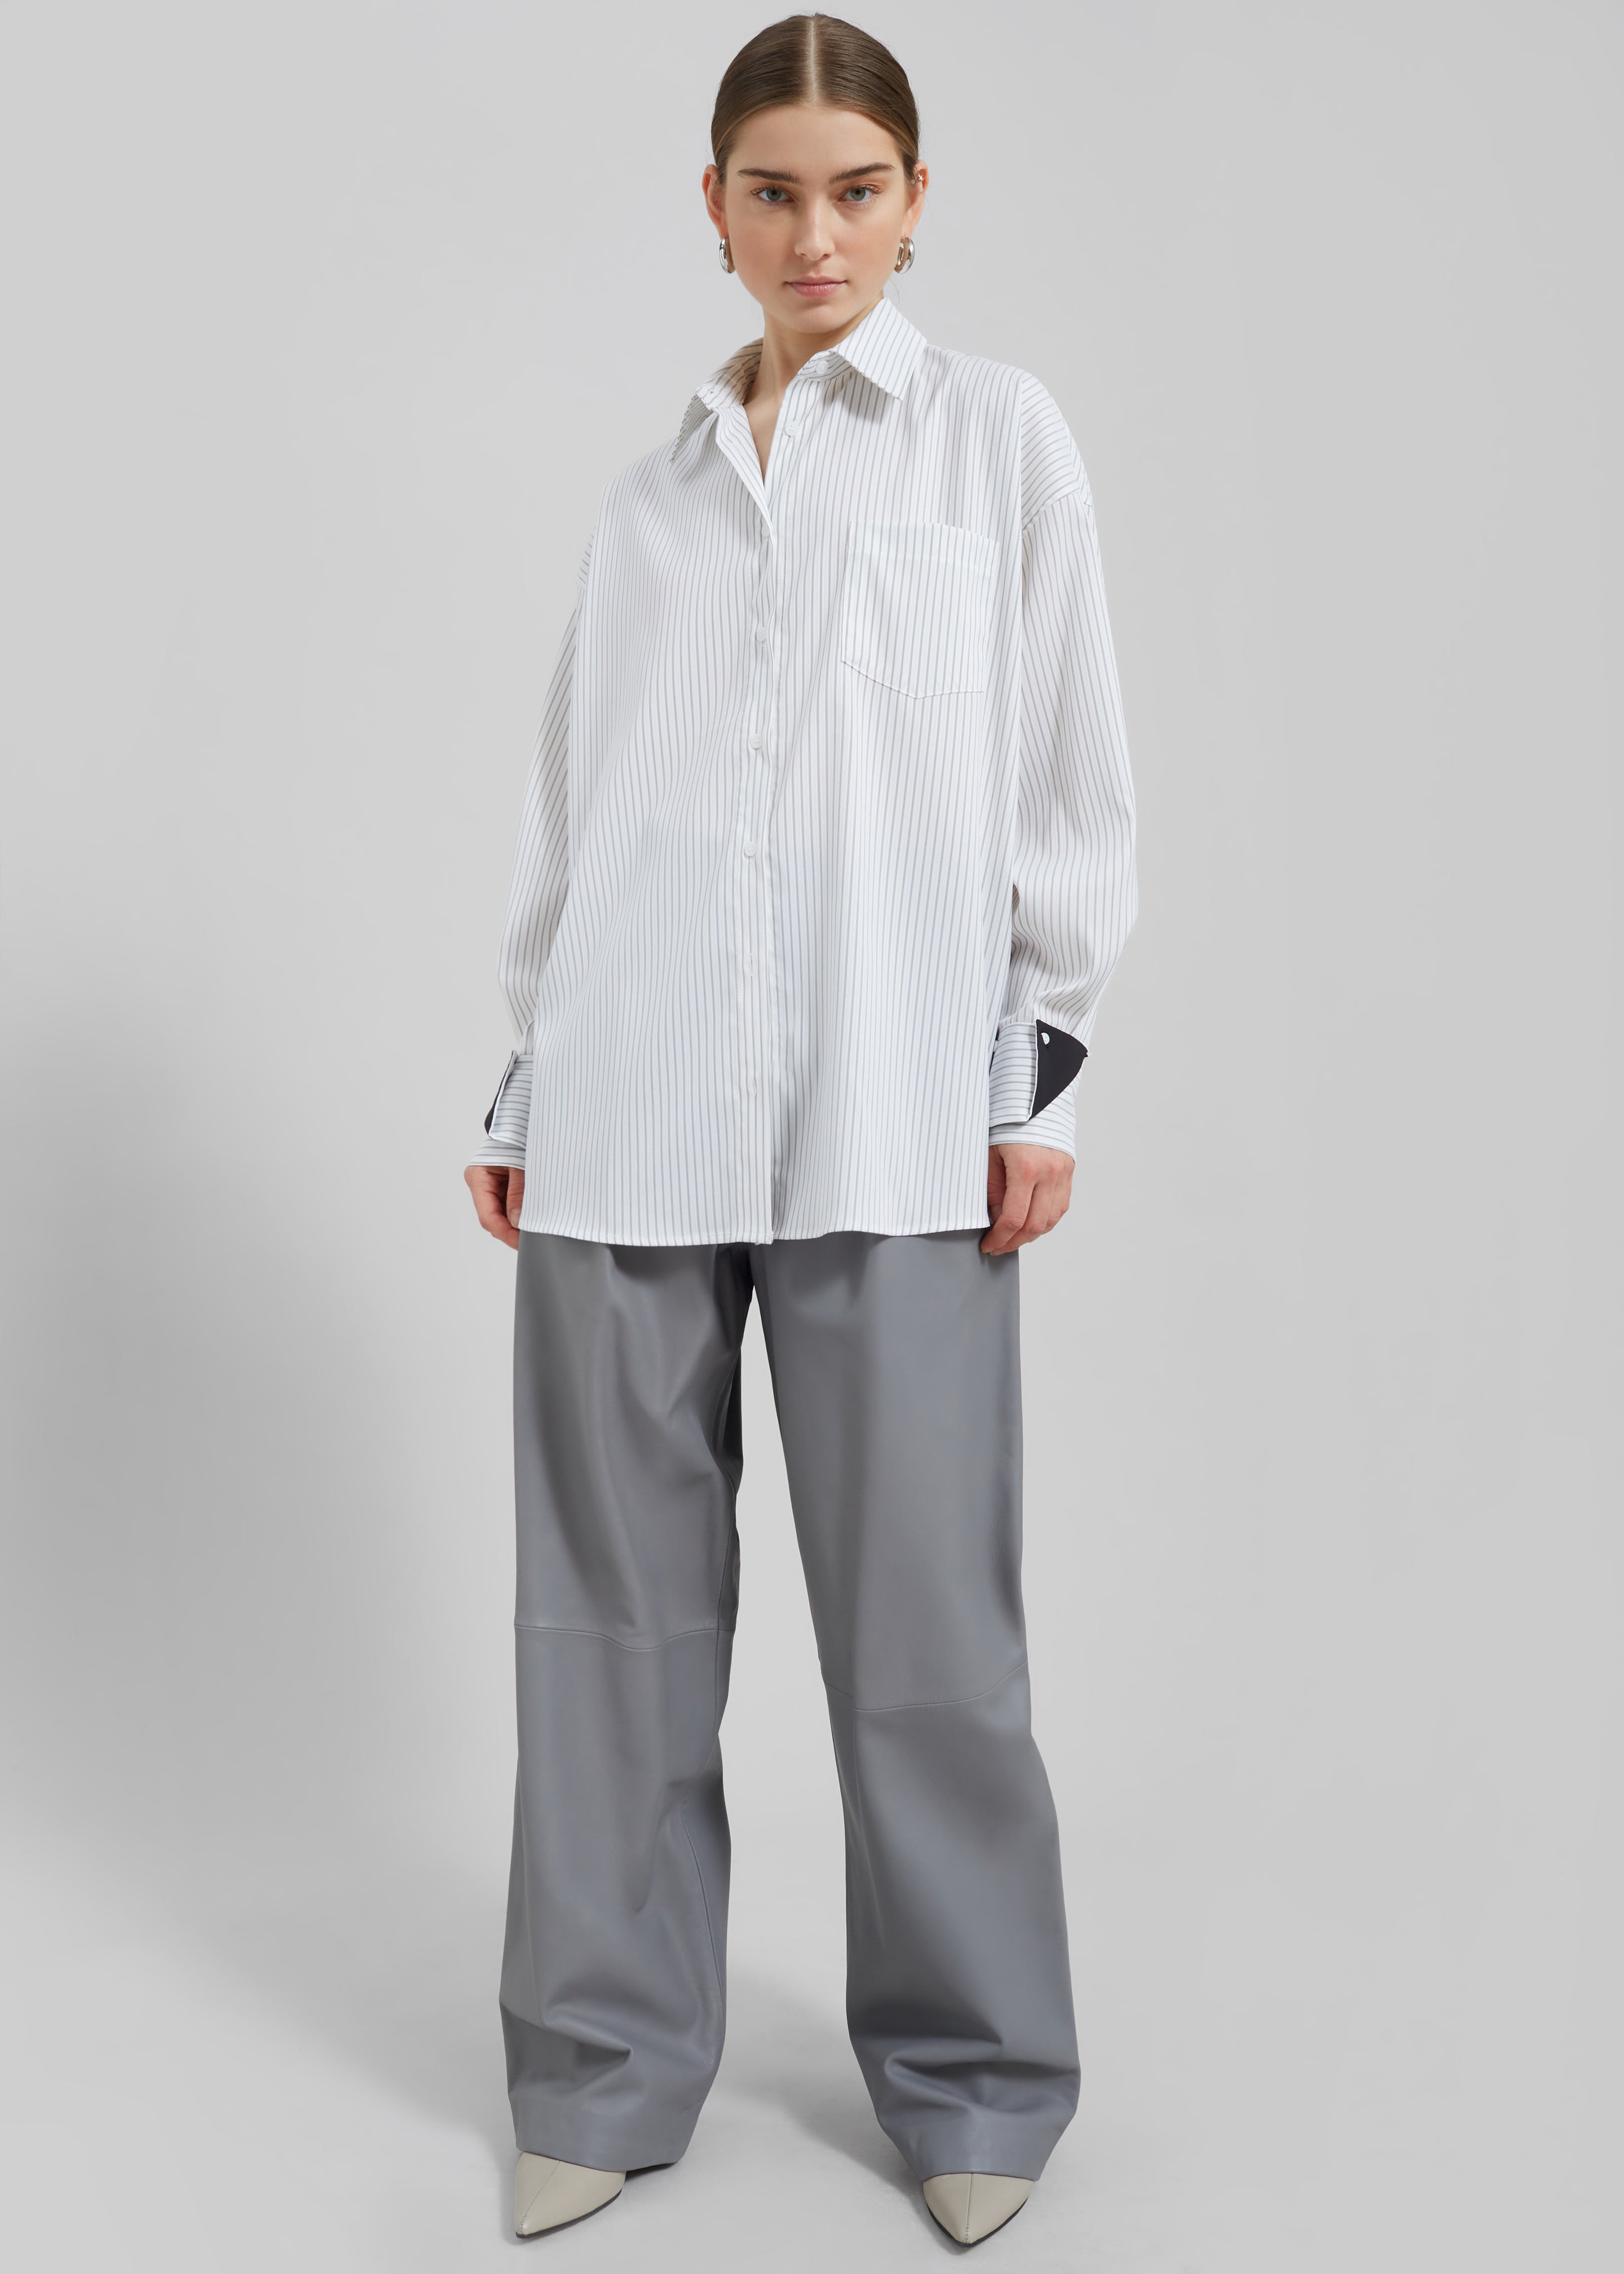 Leona Button Up Shirt - White/Grey Stripe – The Frankie Shop